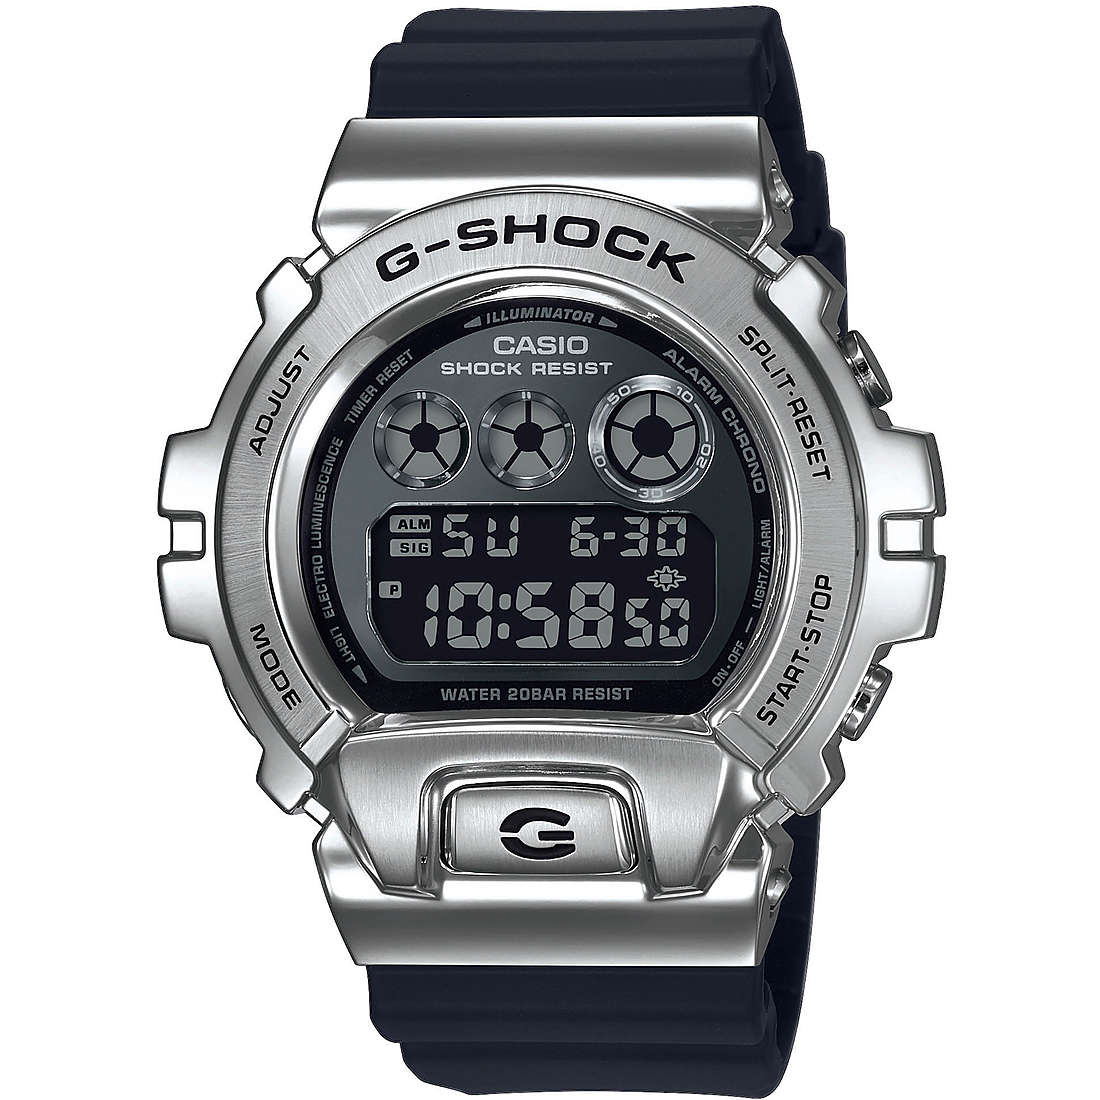 orologio G-Shock Metal Nero multifunzione uomo GM-6900-1ER